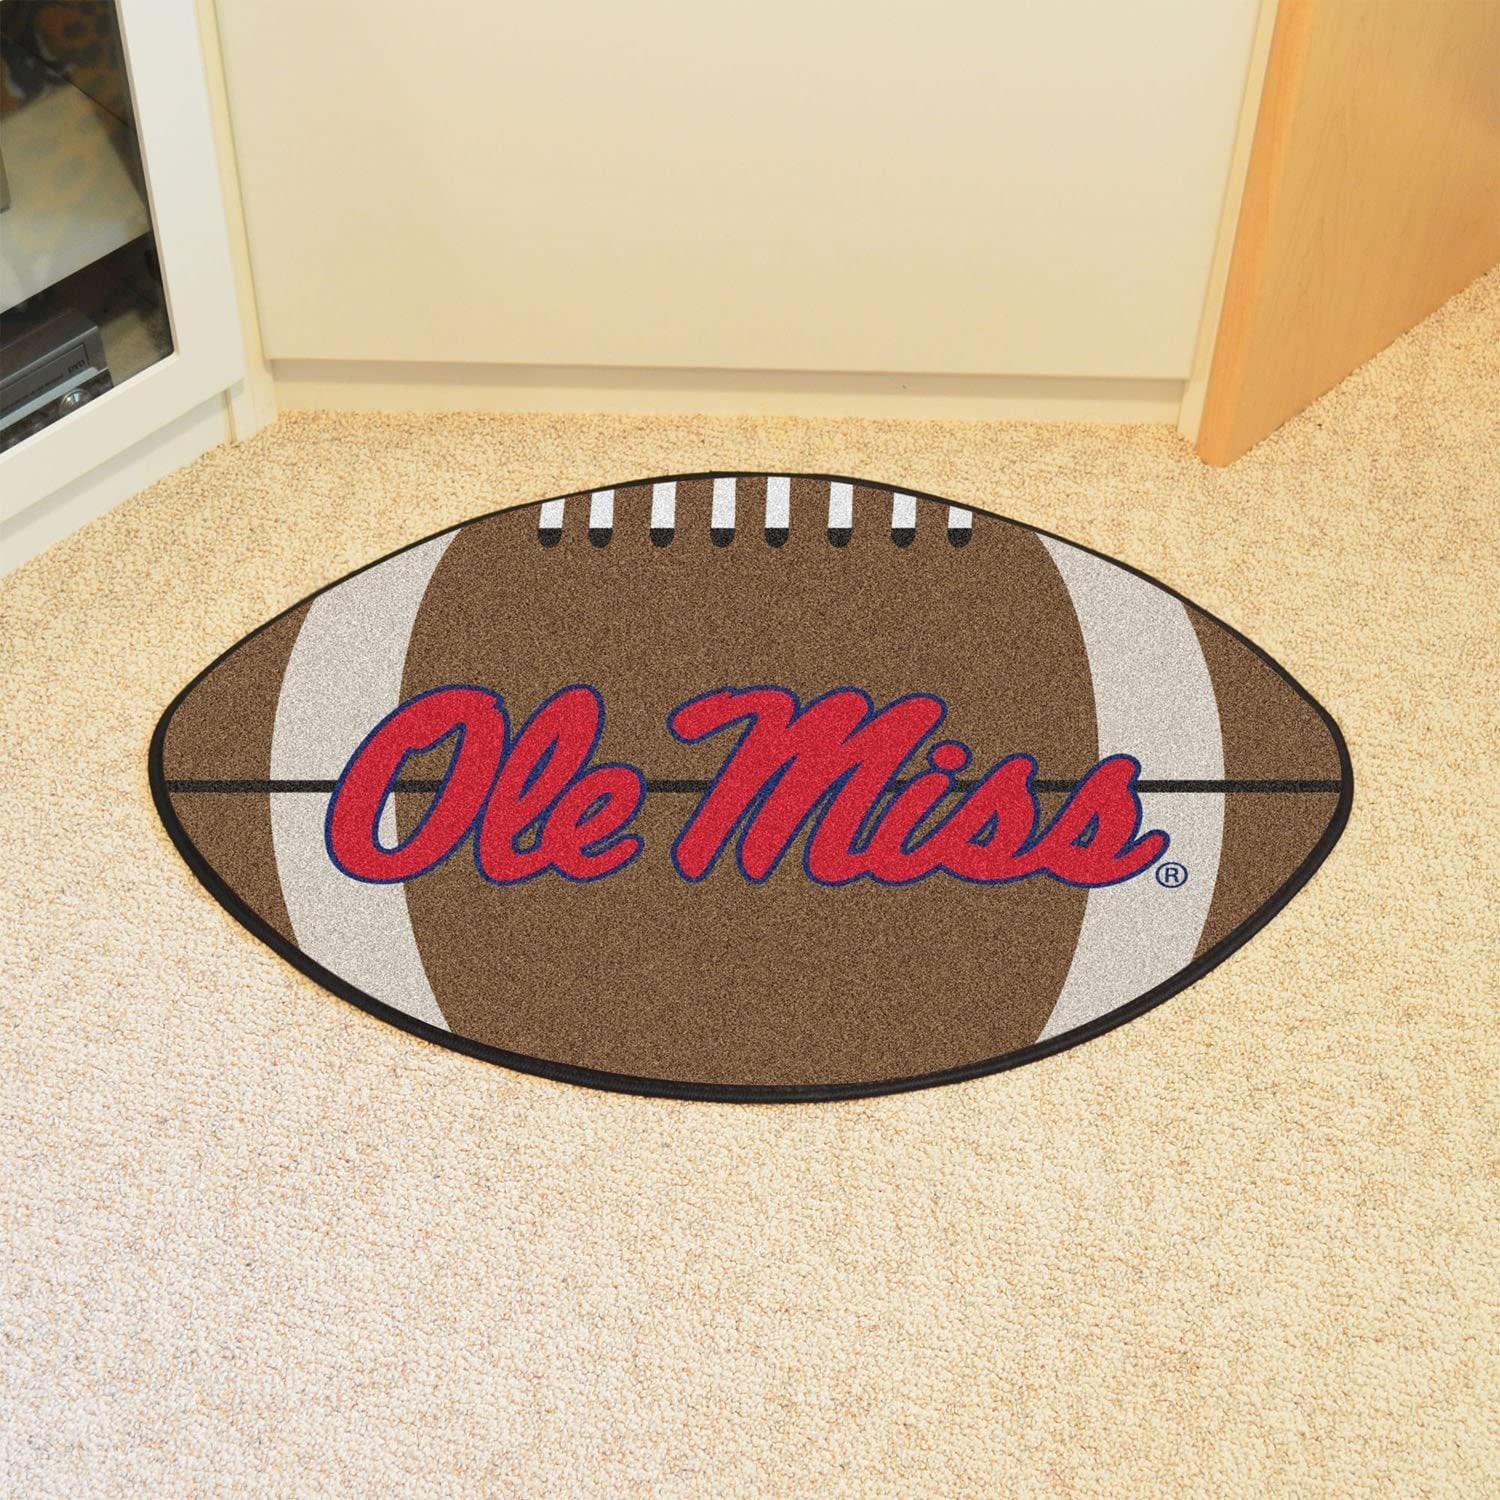 University of Mississippi Ole Miss Rebels Floor Mat Area Rug, 20x32 Inch, Non-Skid Backing, Football Design